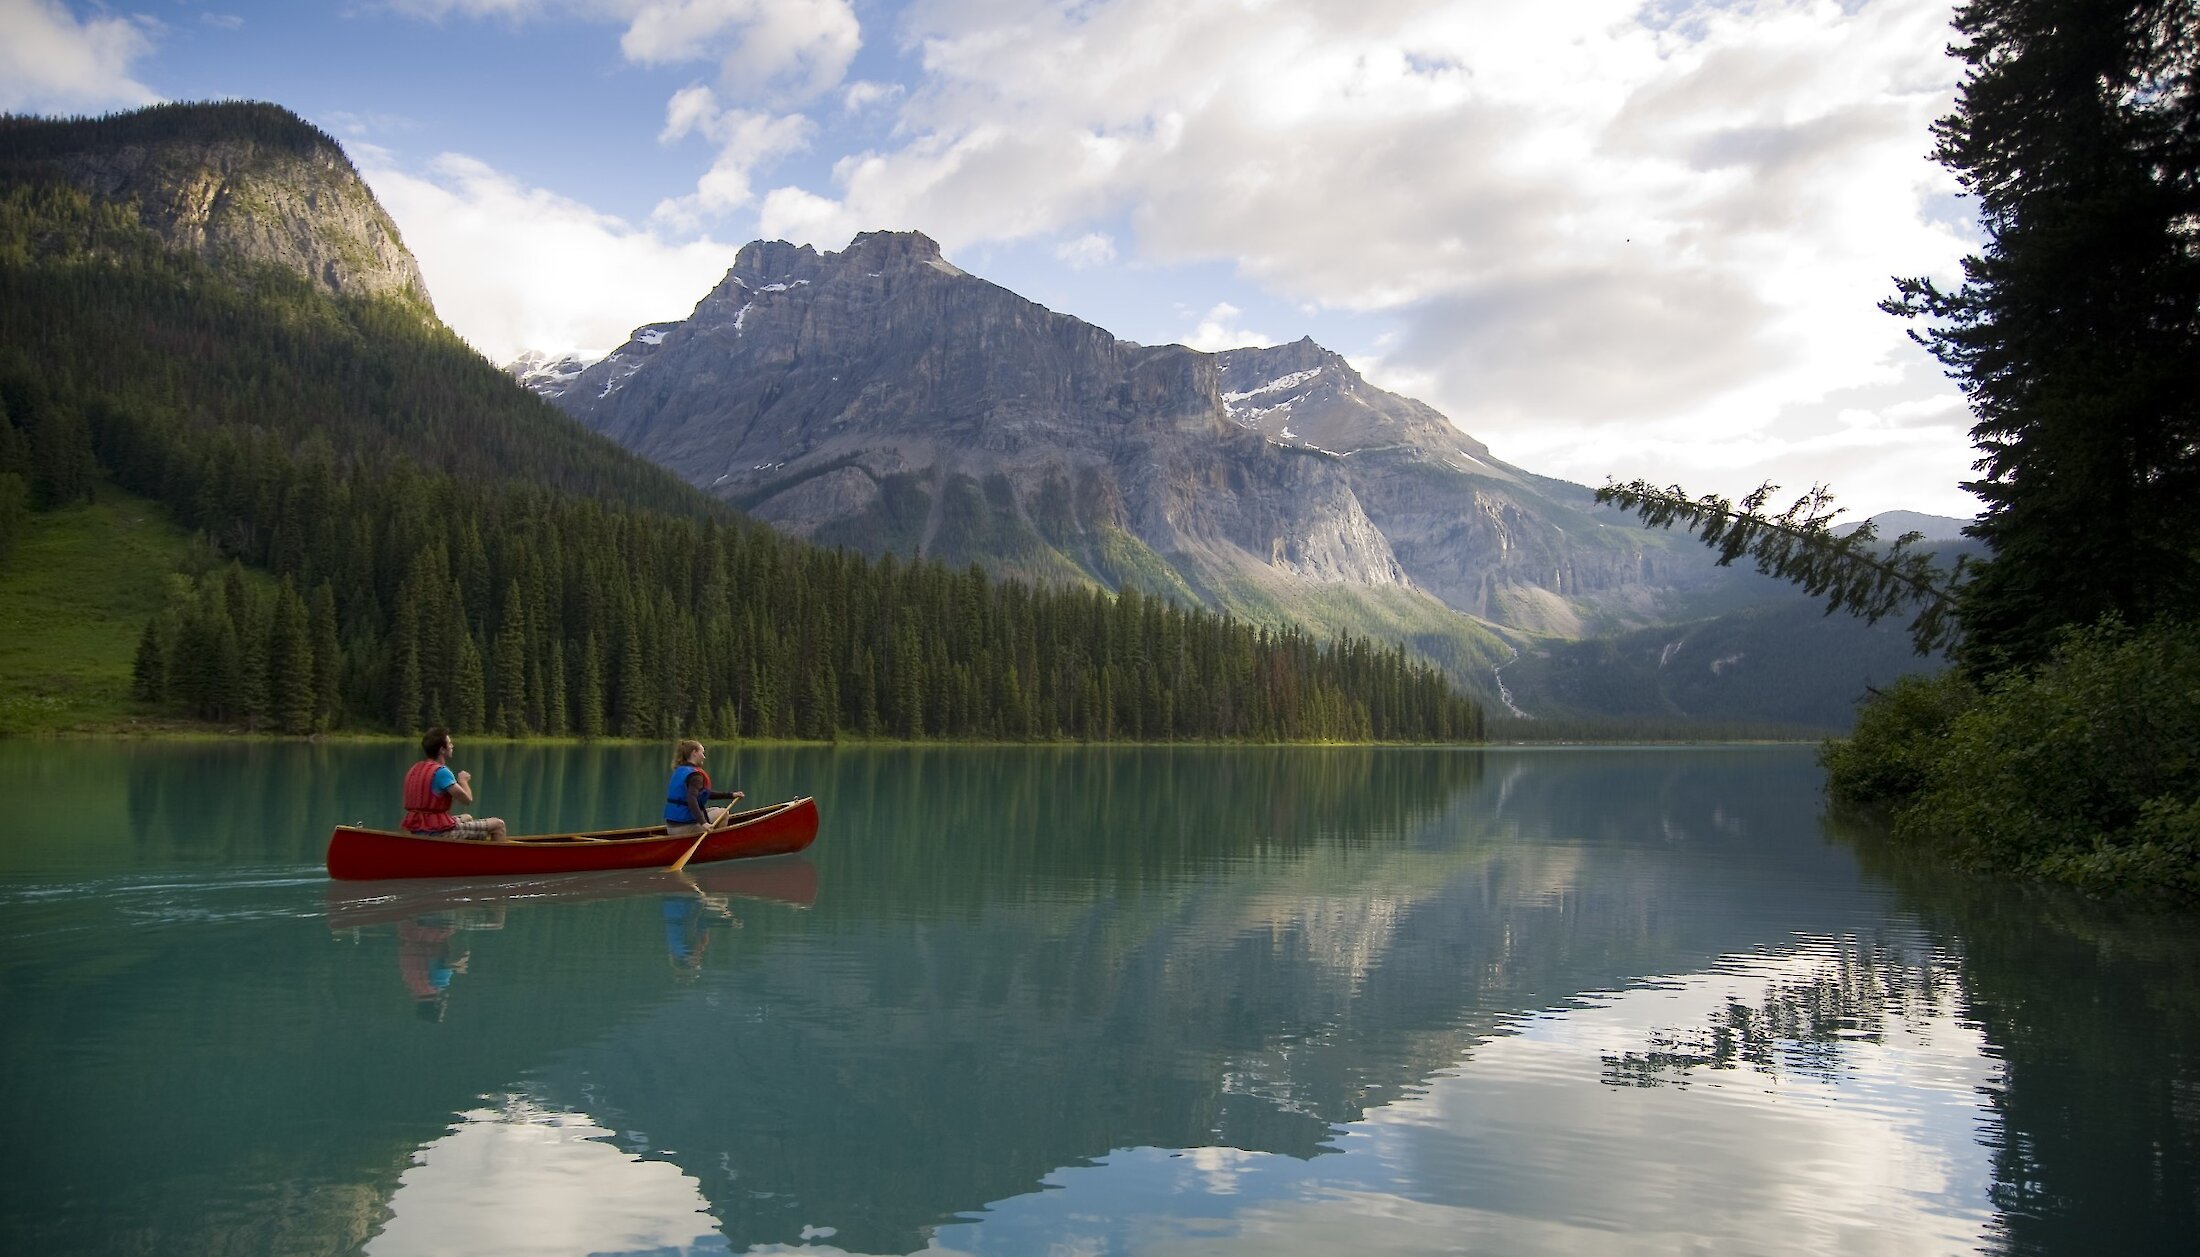 Canoeing on Emerald Lake in British Columbia